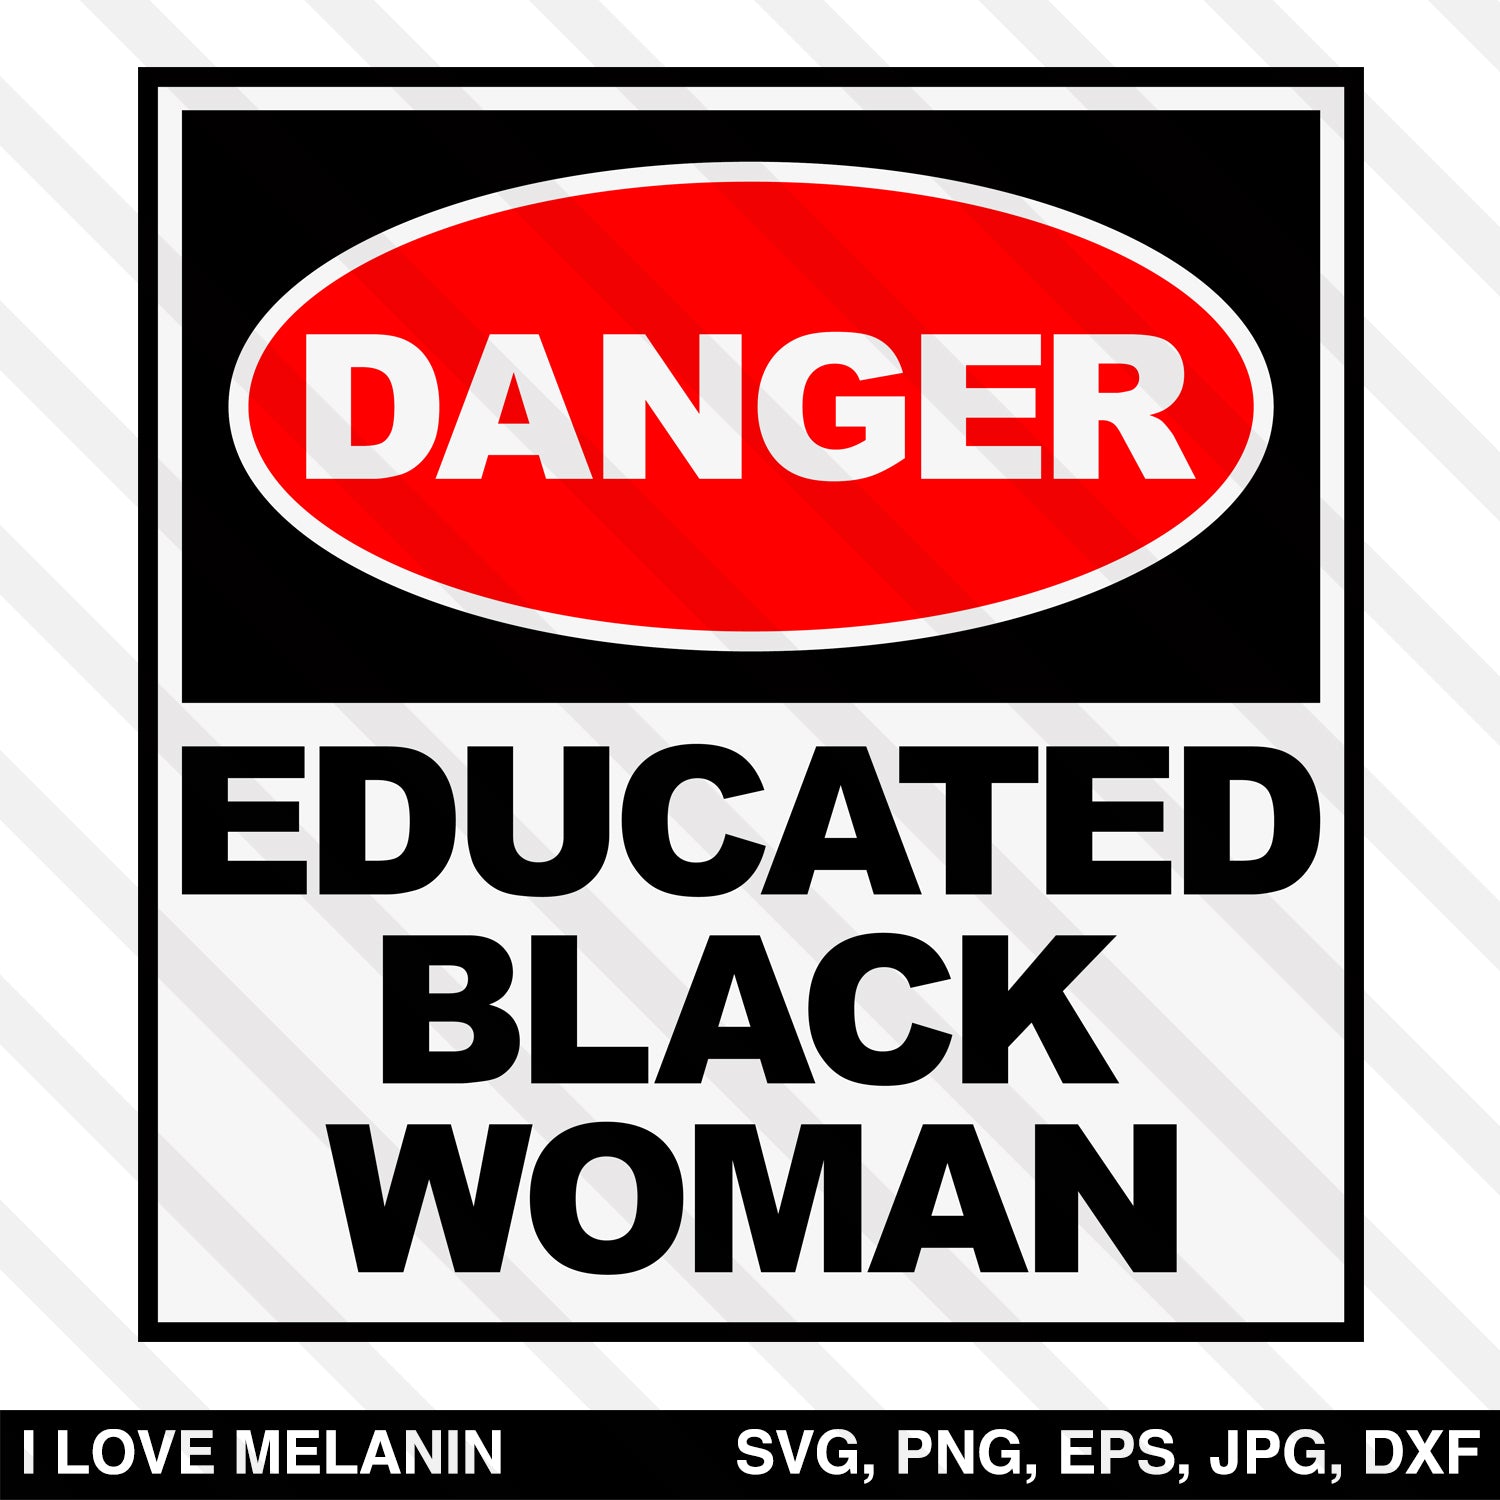 Danger Educated Black Woman SVG